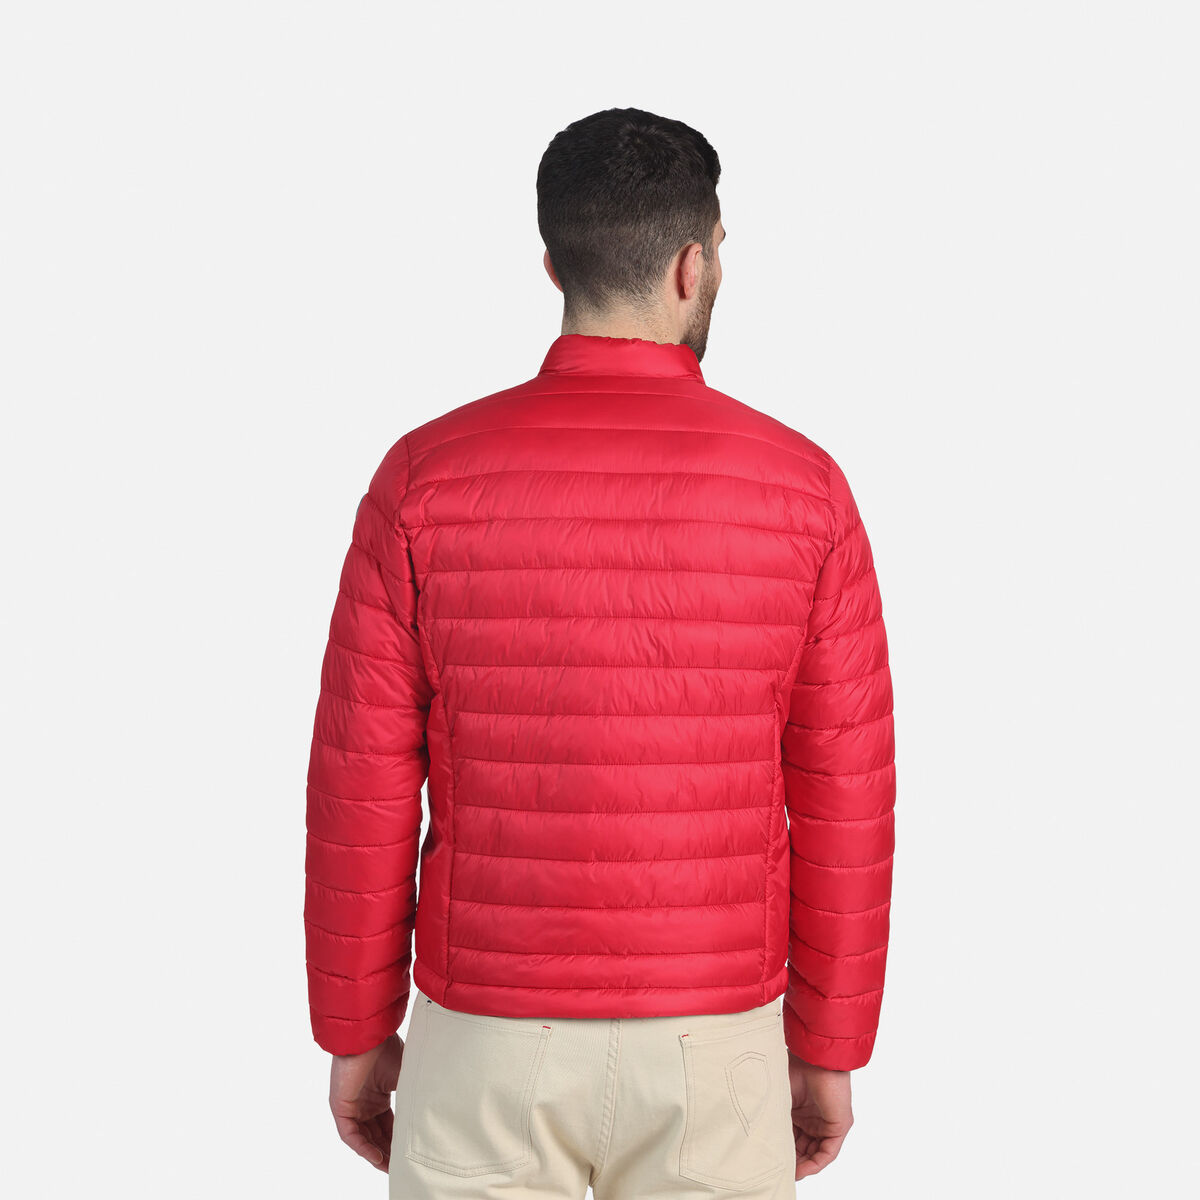 Men's insulated jacket 100gr